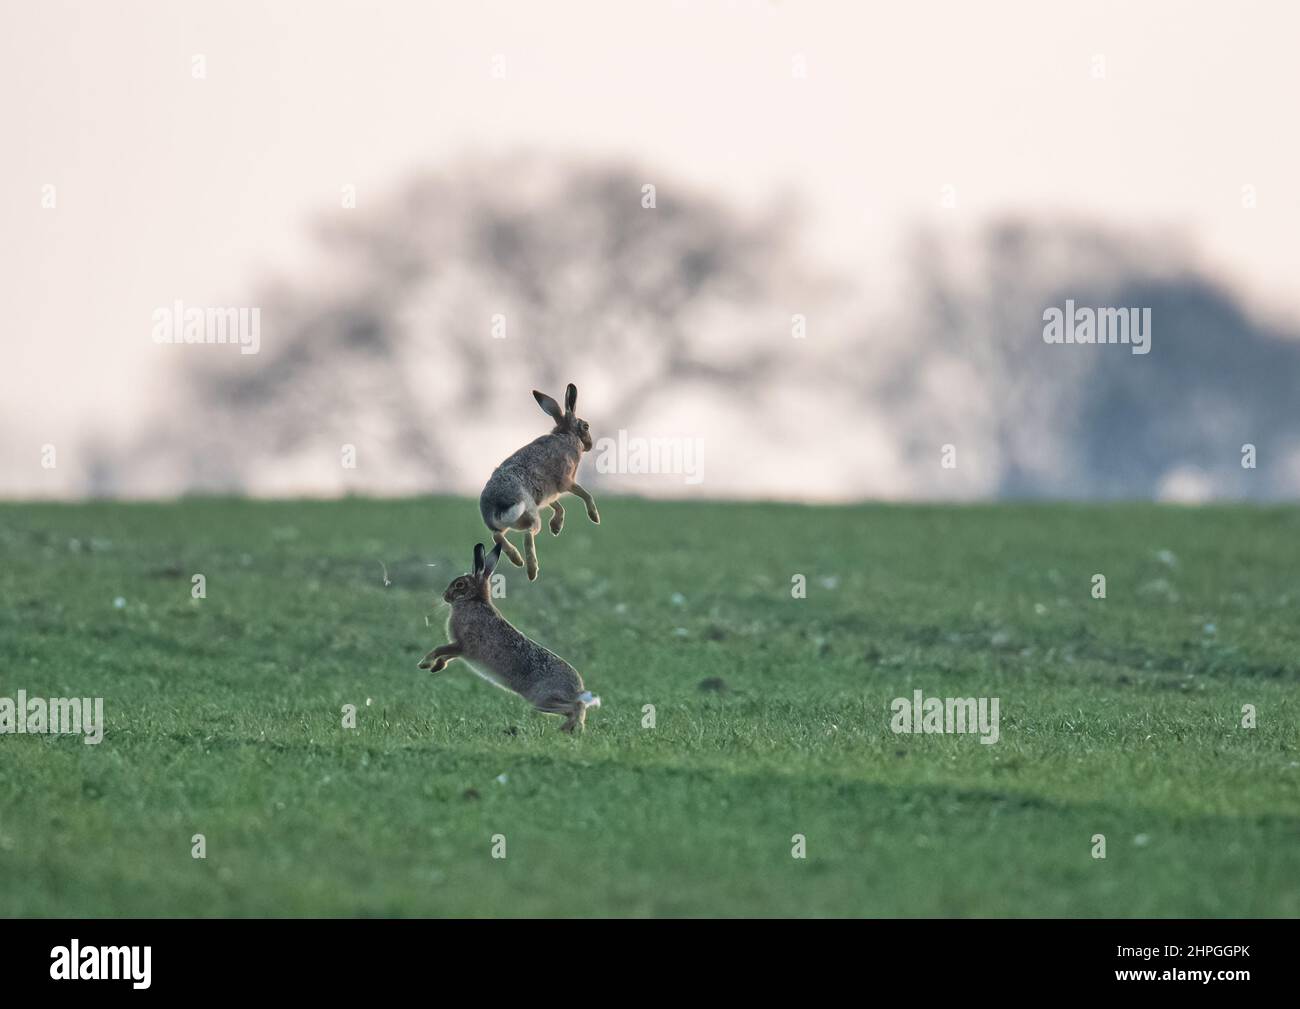 A hare jumping -Fotos und -Bildmaterial in hoher Auflösung – Alamy